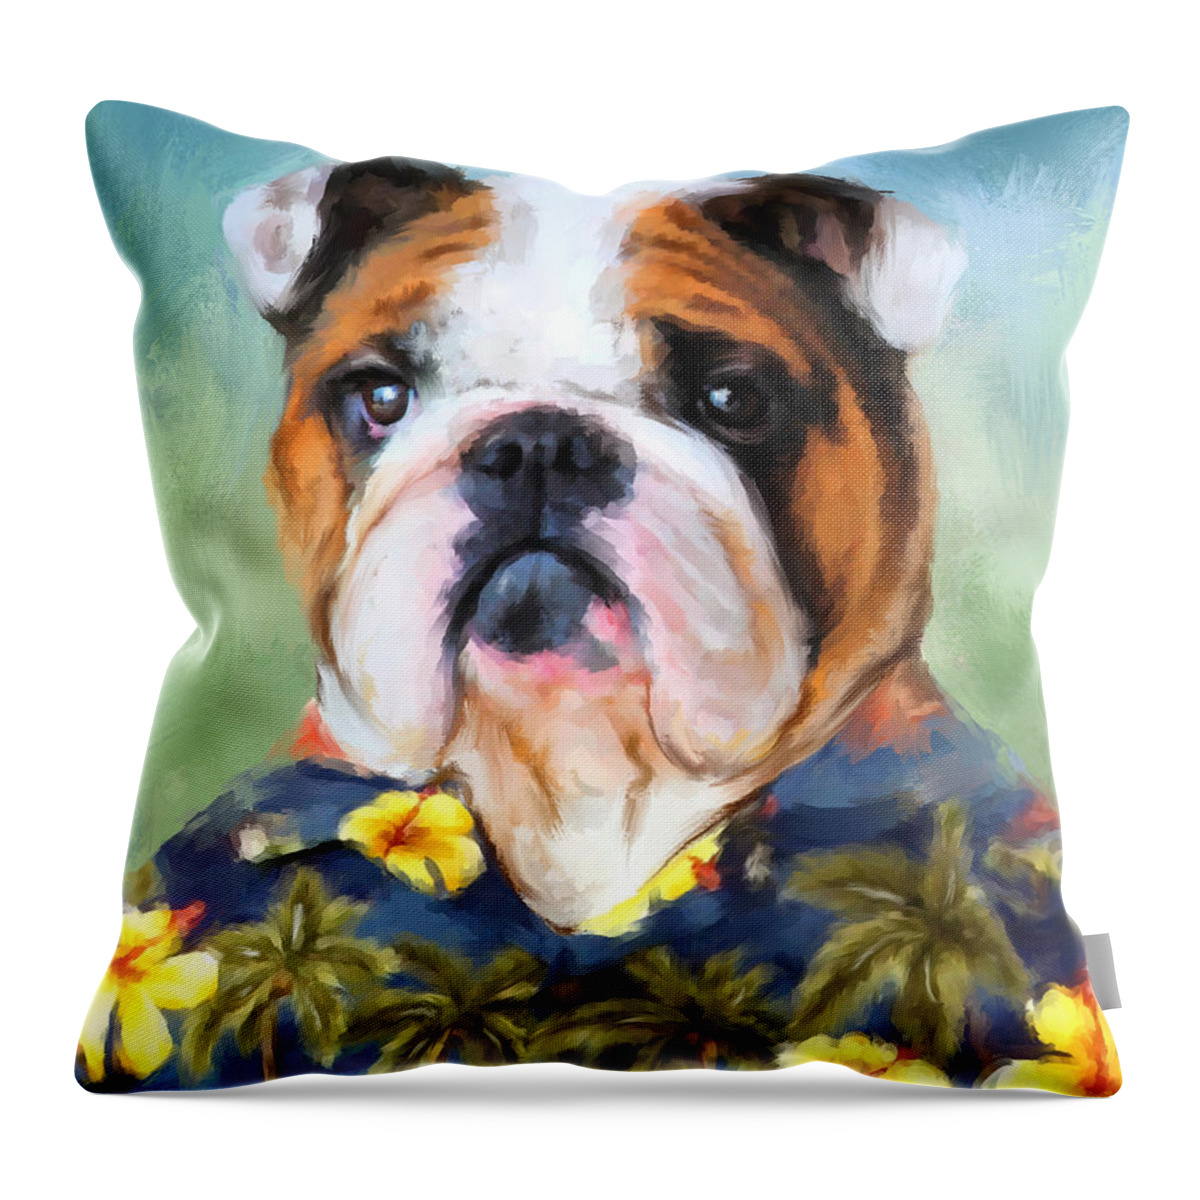 Art Throw Pillow featuring the painting Chic English Bulldog by Jai Johnson